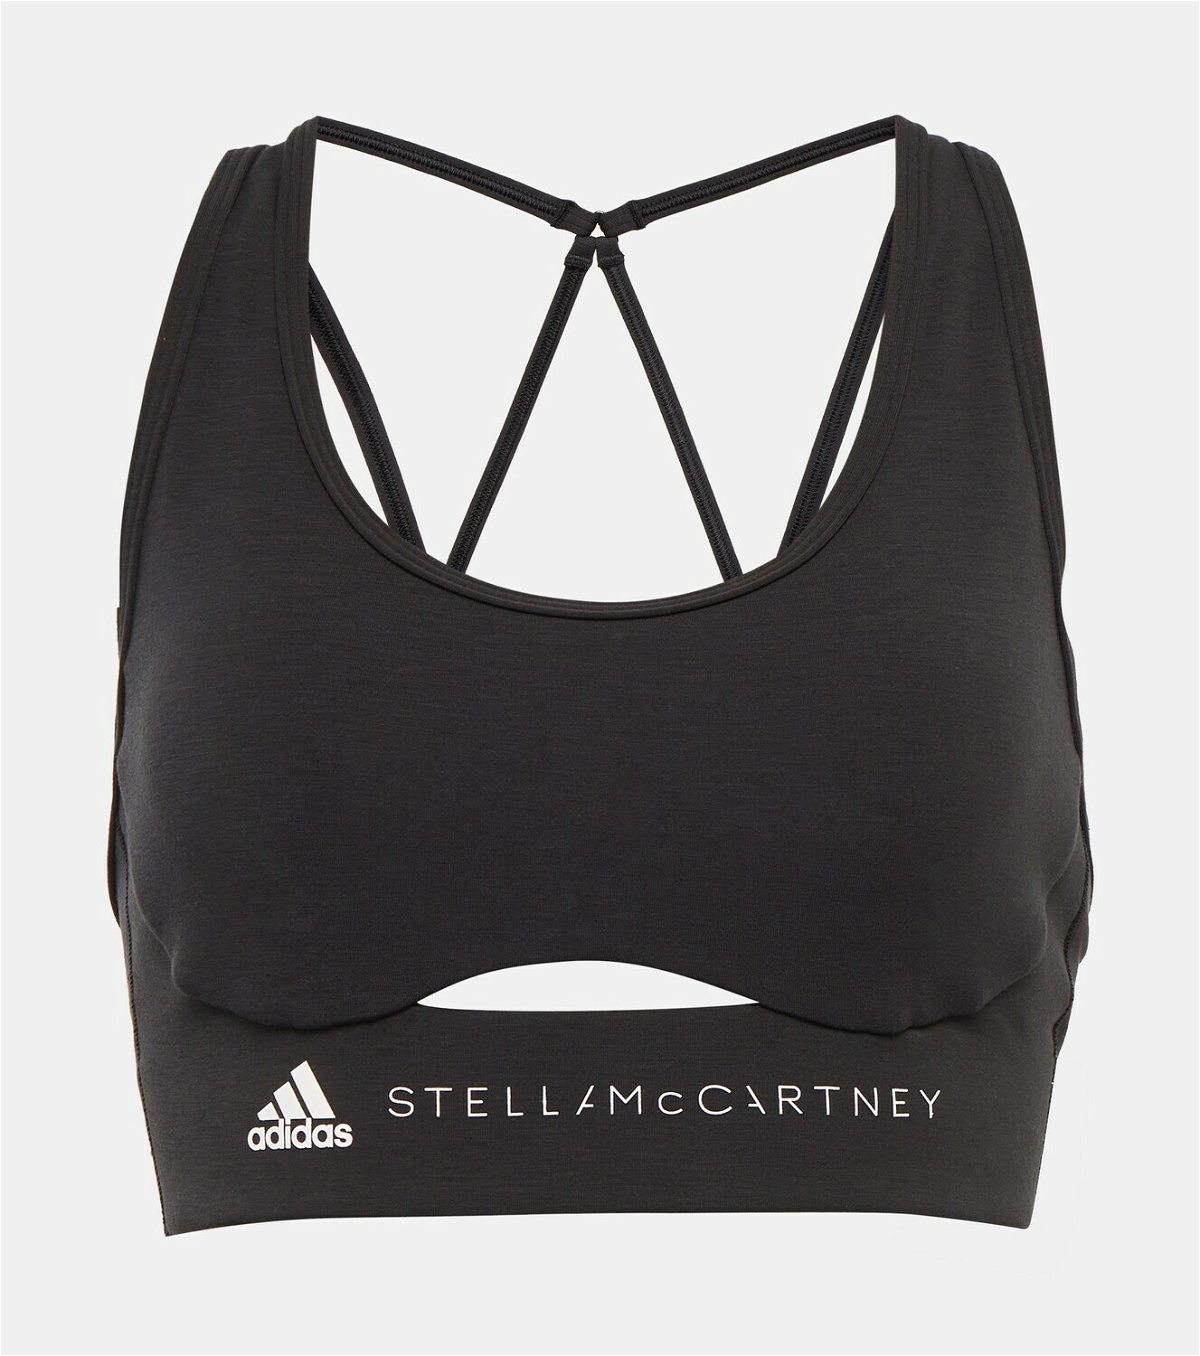 Adidas by Stella McCartney - TruePace sports bra adidas by Stella McCartney